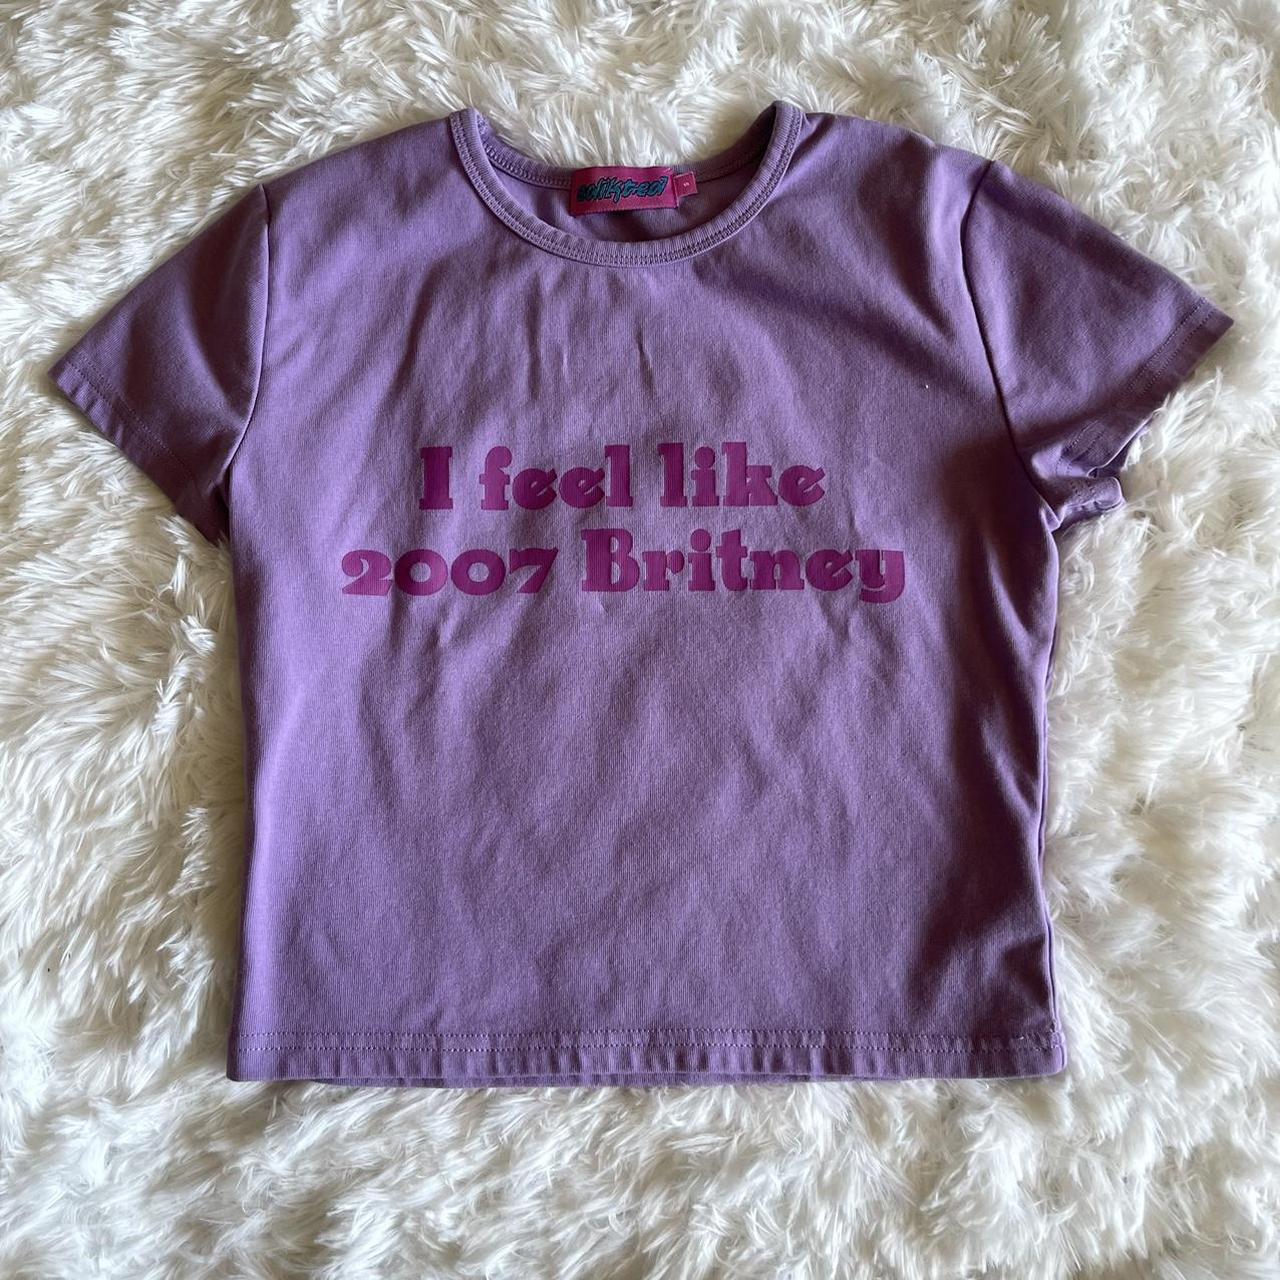 Edikted Women's Purple T-shirt